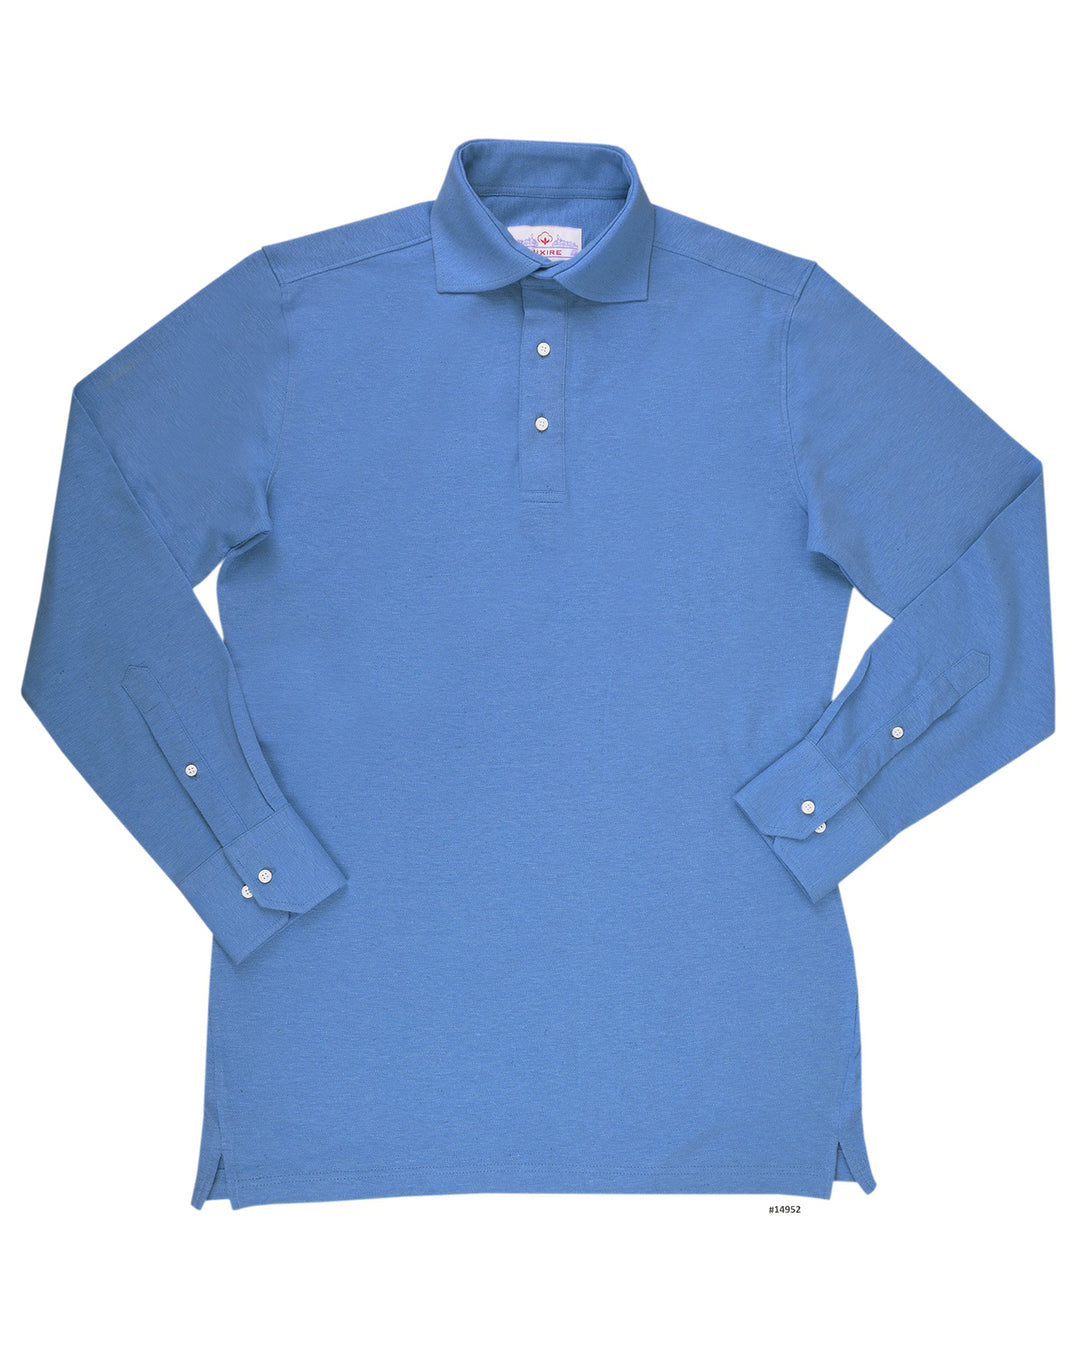 Steel Blue Cotton Polo T-shirt